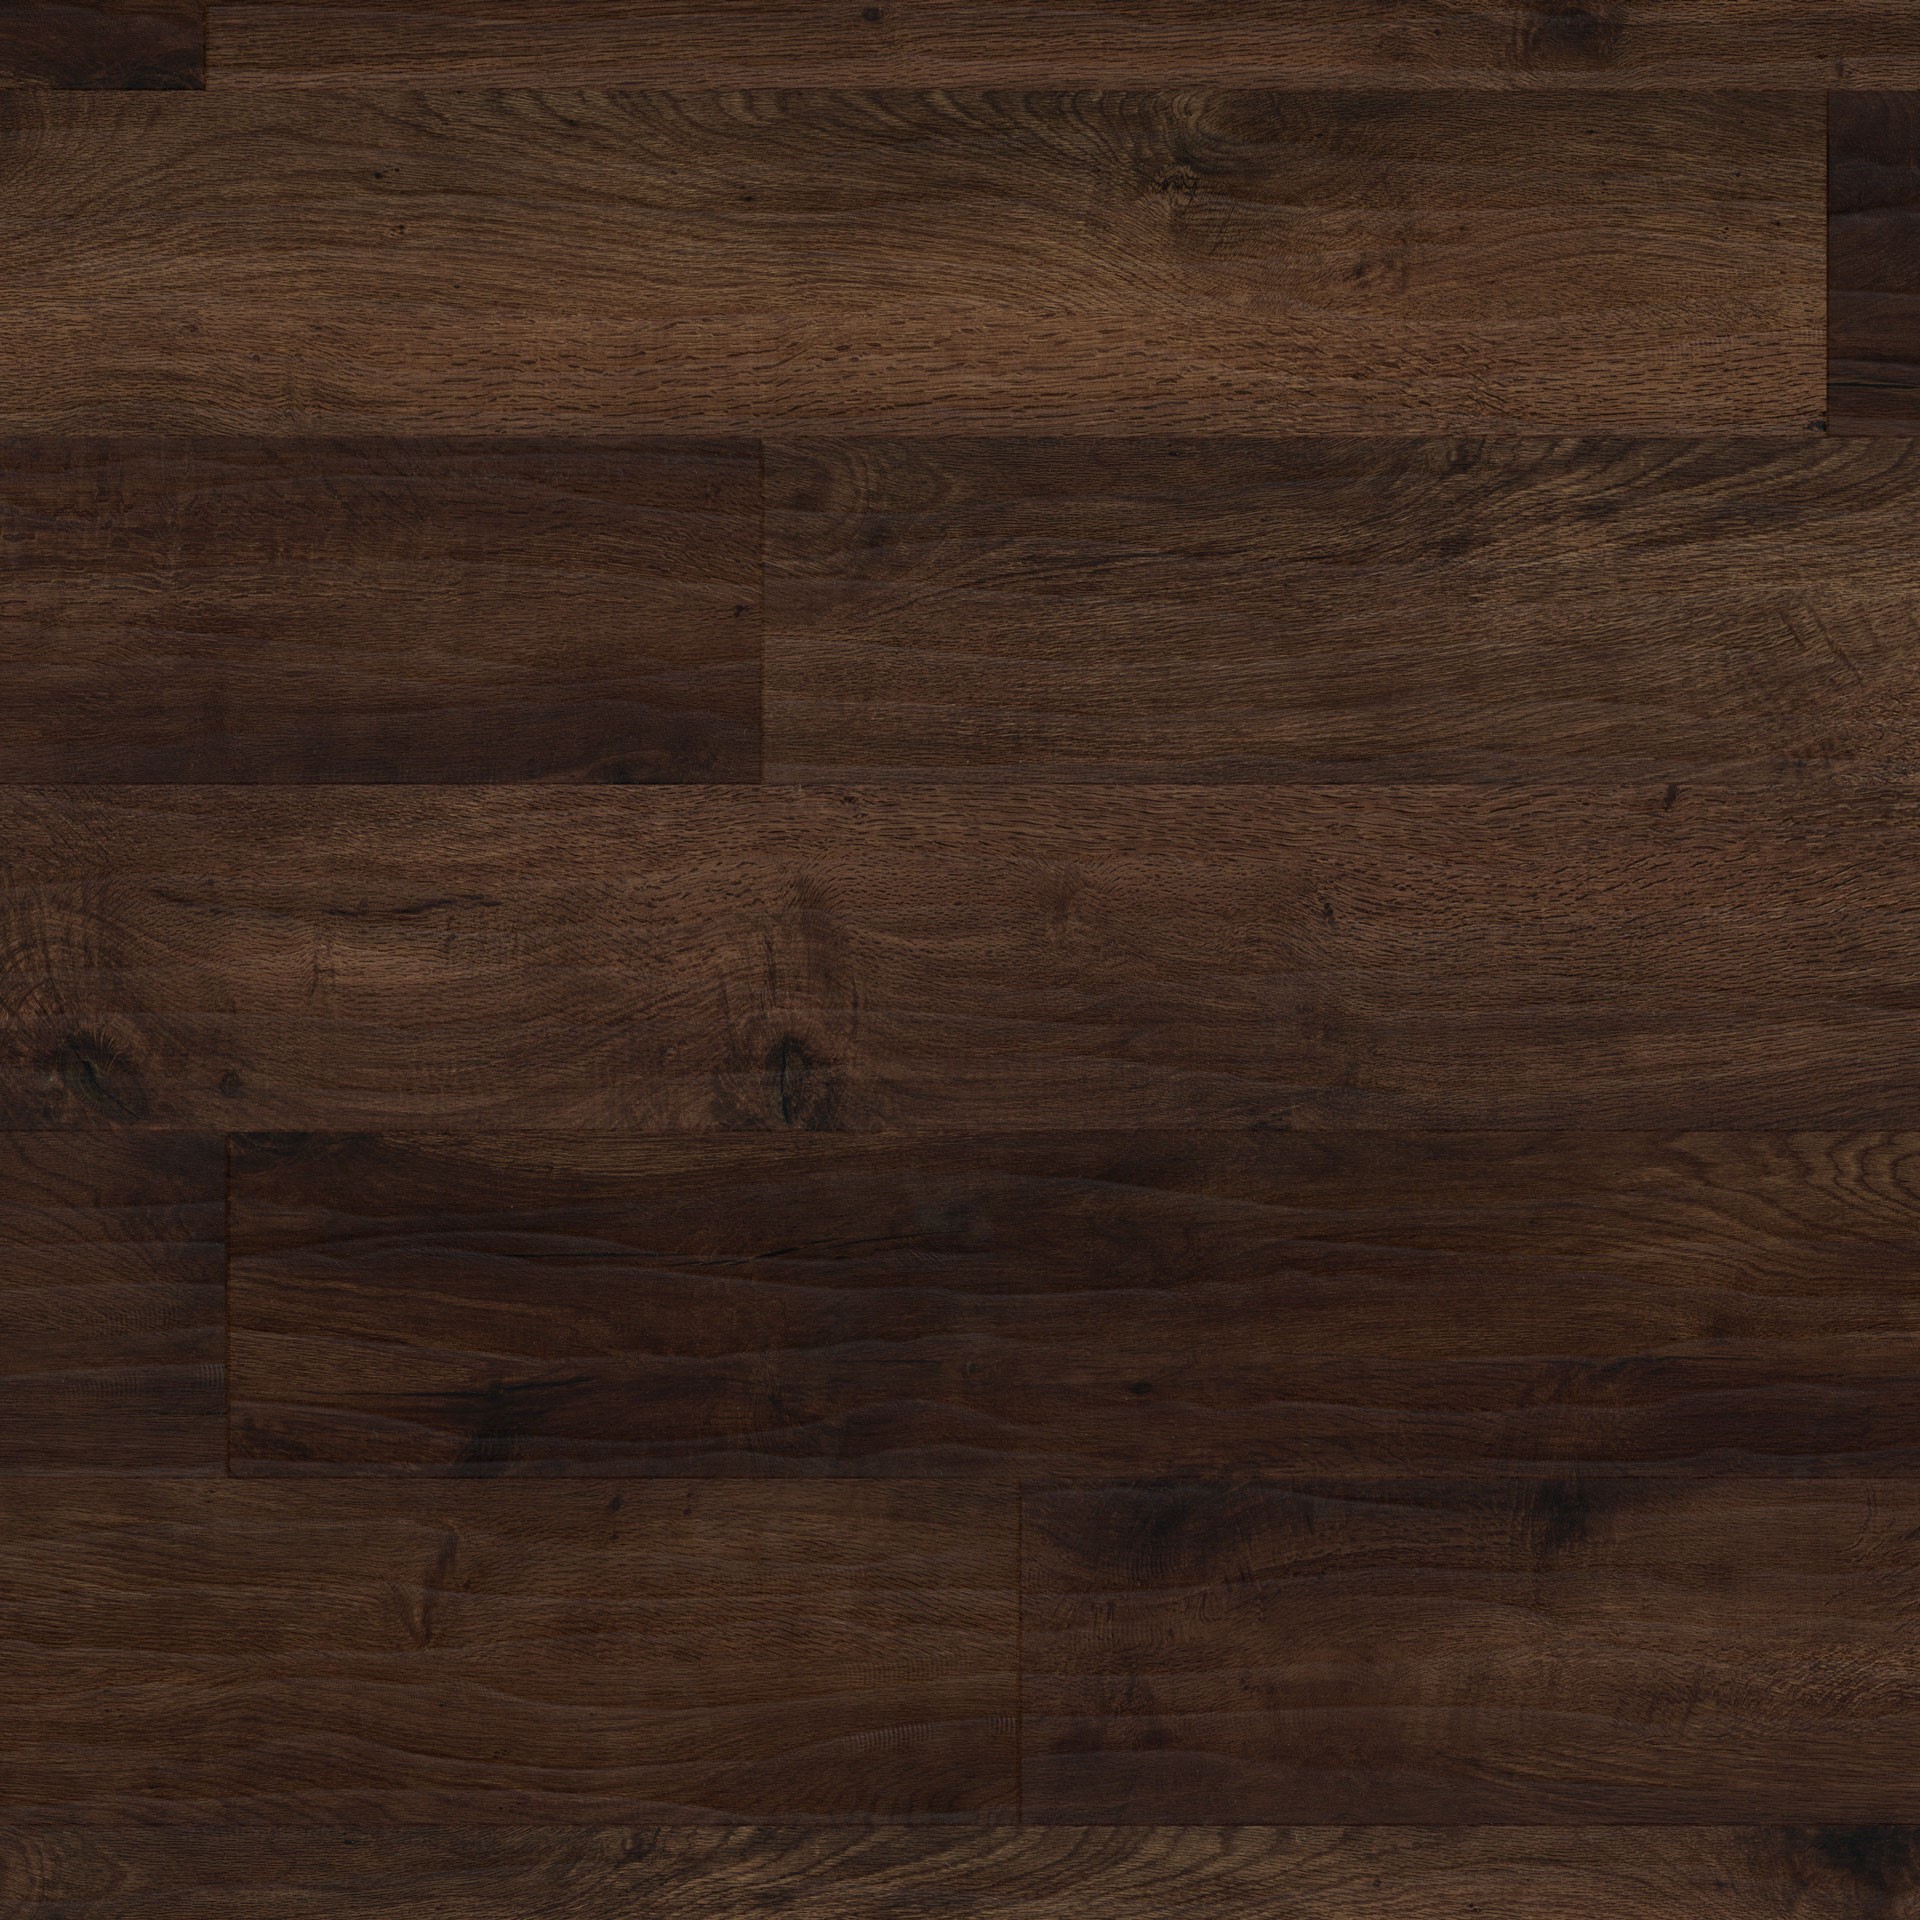 Karndean Art Select Wood - Winter Oak RL04 Safety Flooring